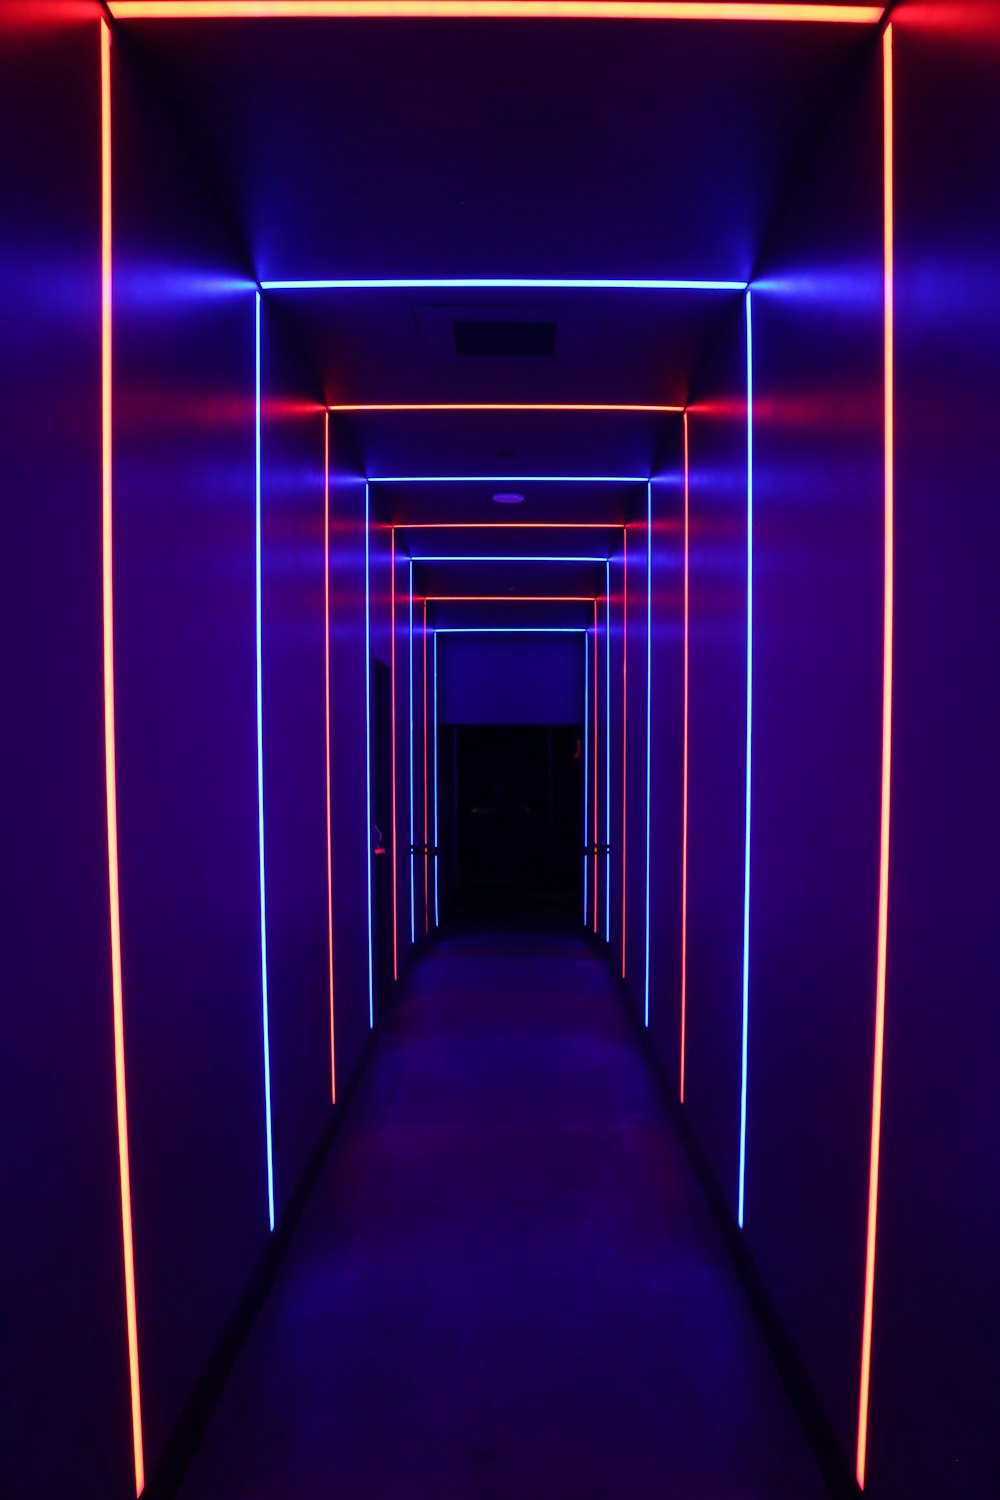 a dark room with a blue light